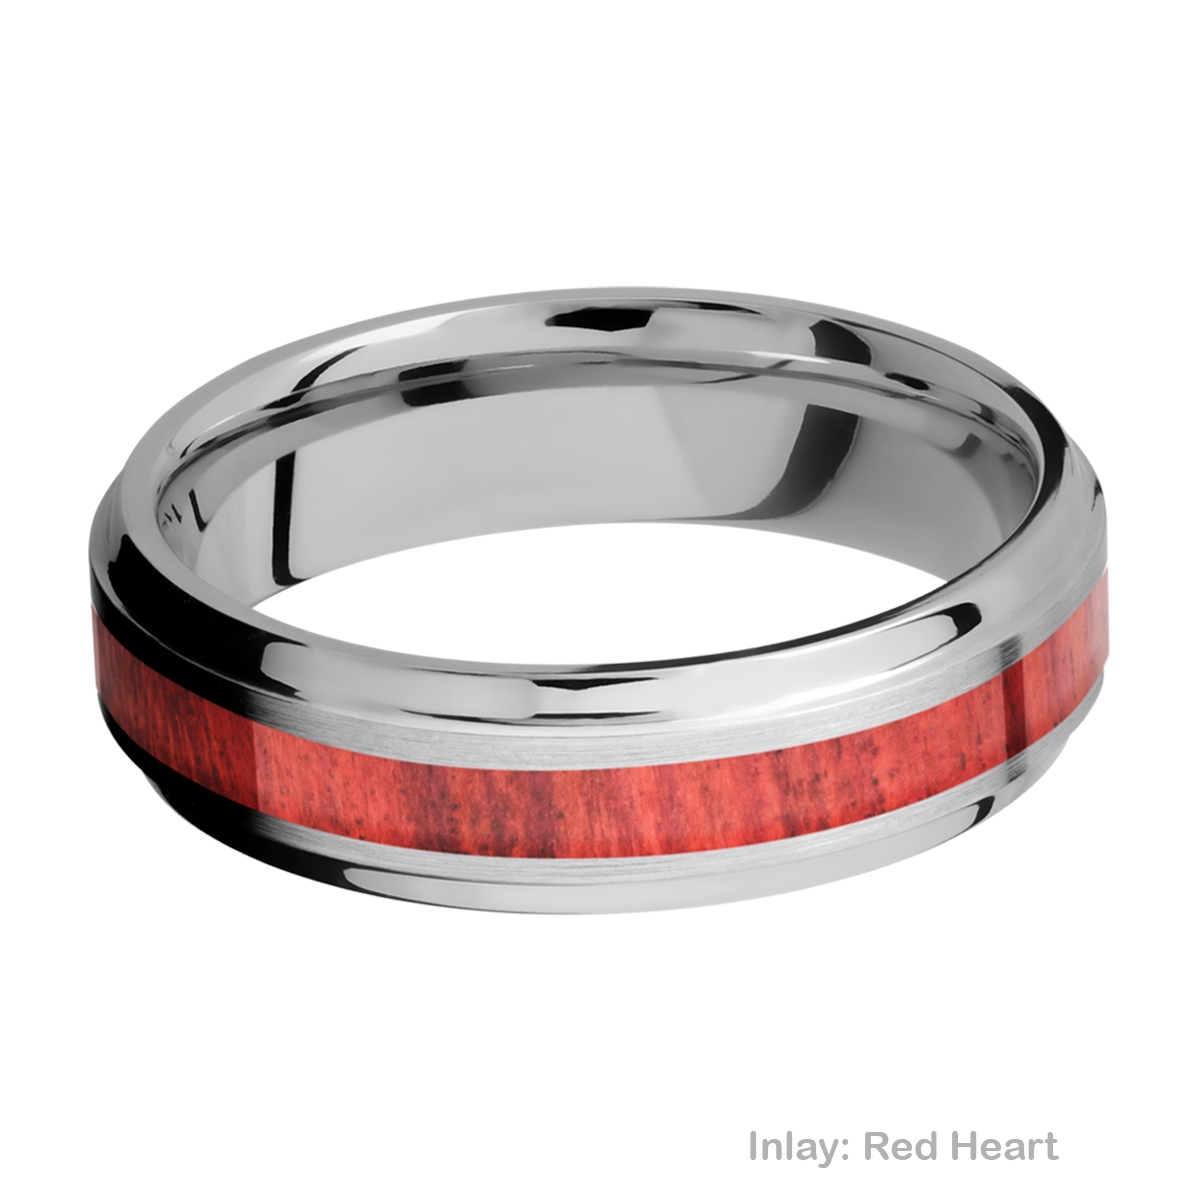 Lashbrook CC6B13(S)/HARDWOOD Cobalt Chrome Wedding Ring or Band